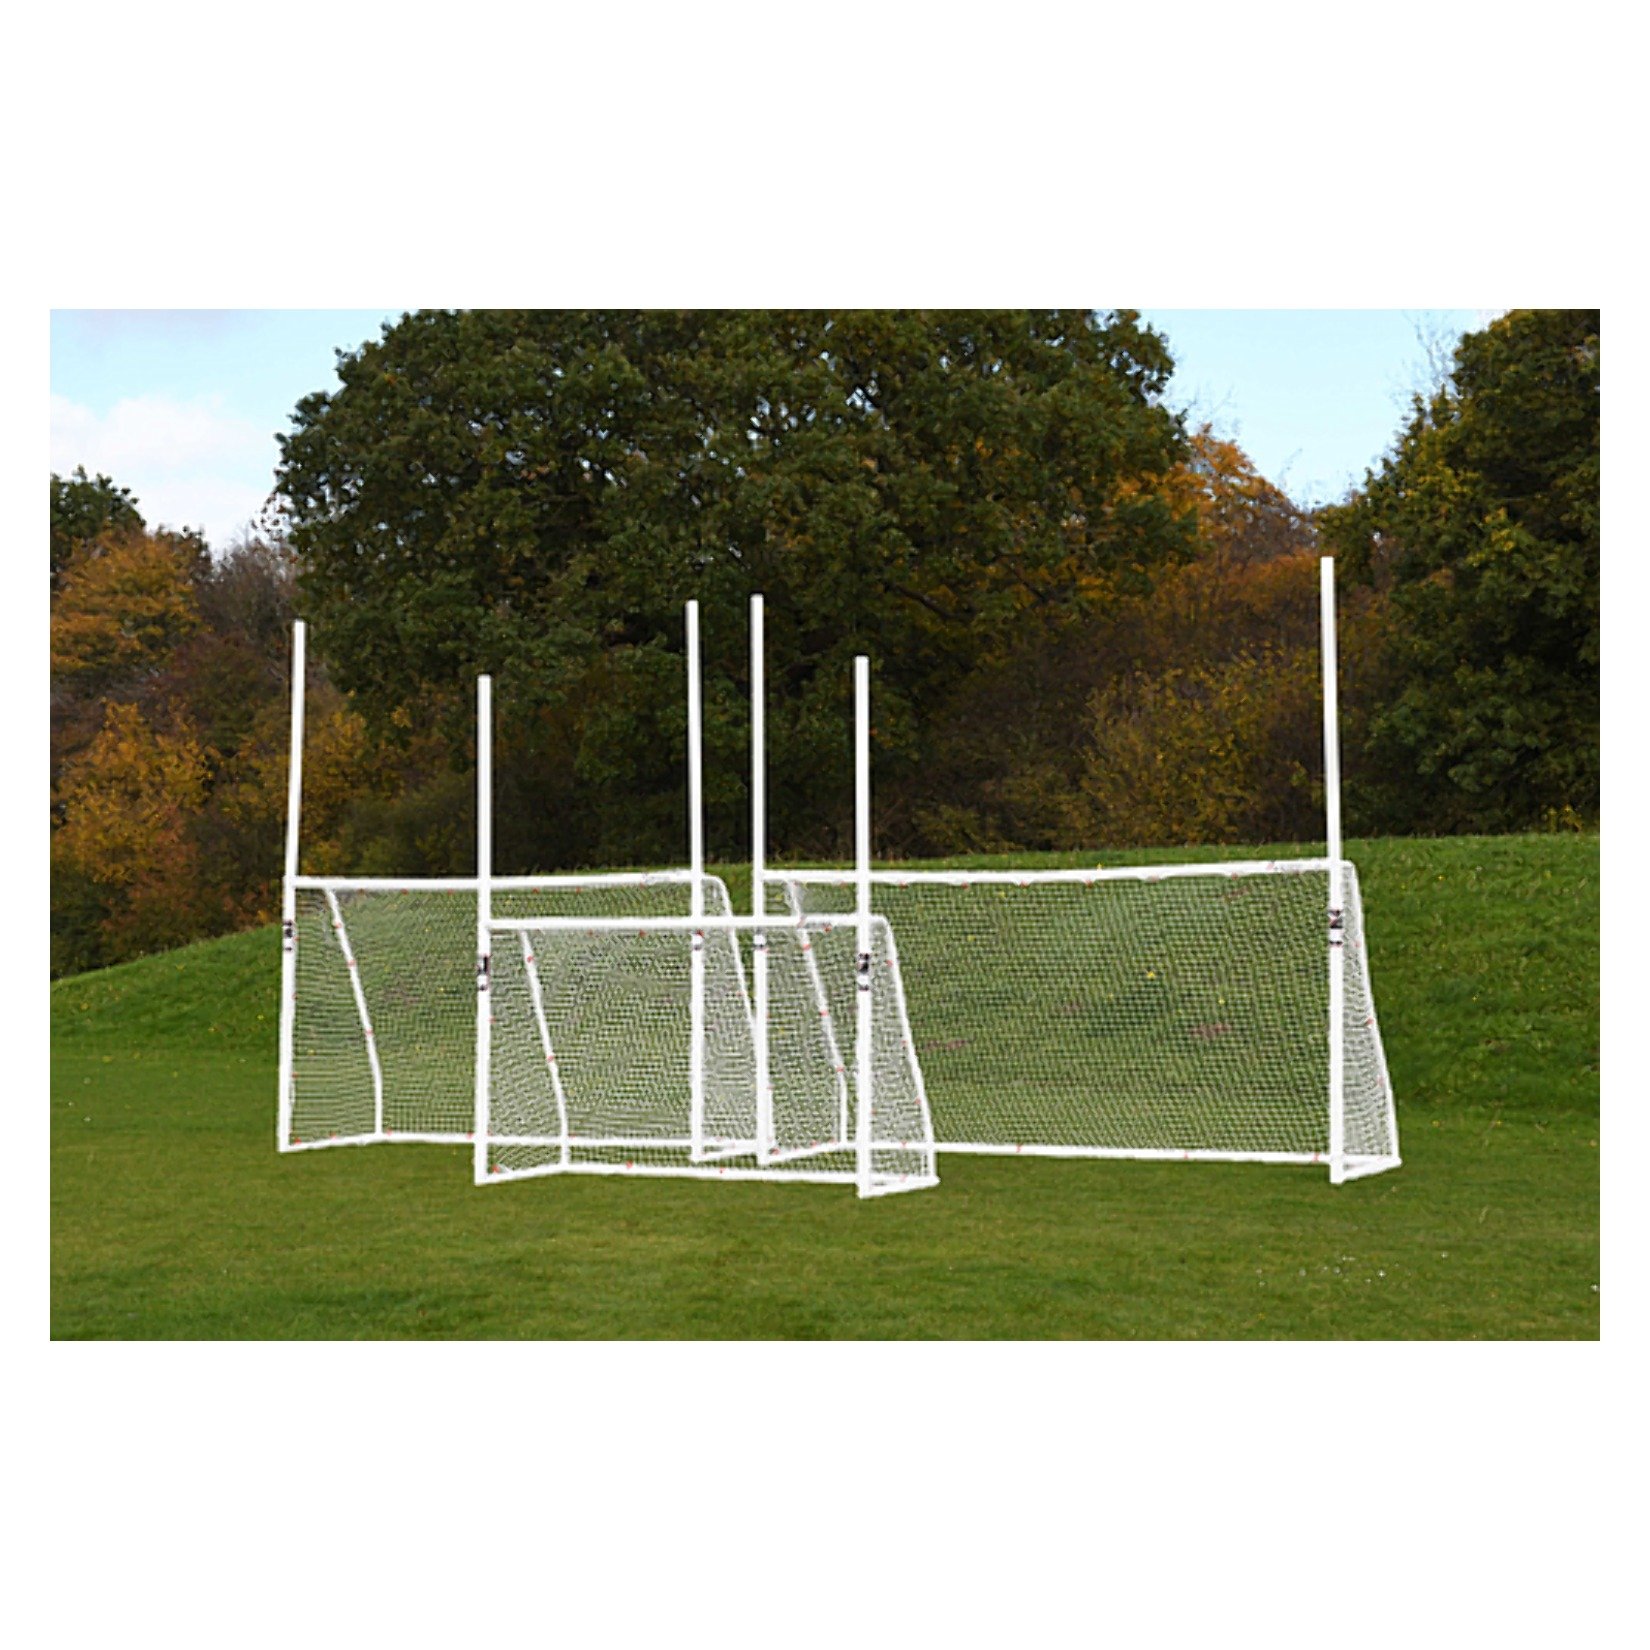 Precision GAA Match Goal Posts 10ft x 6ft